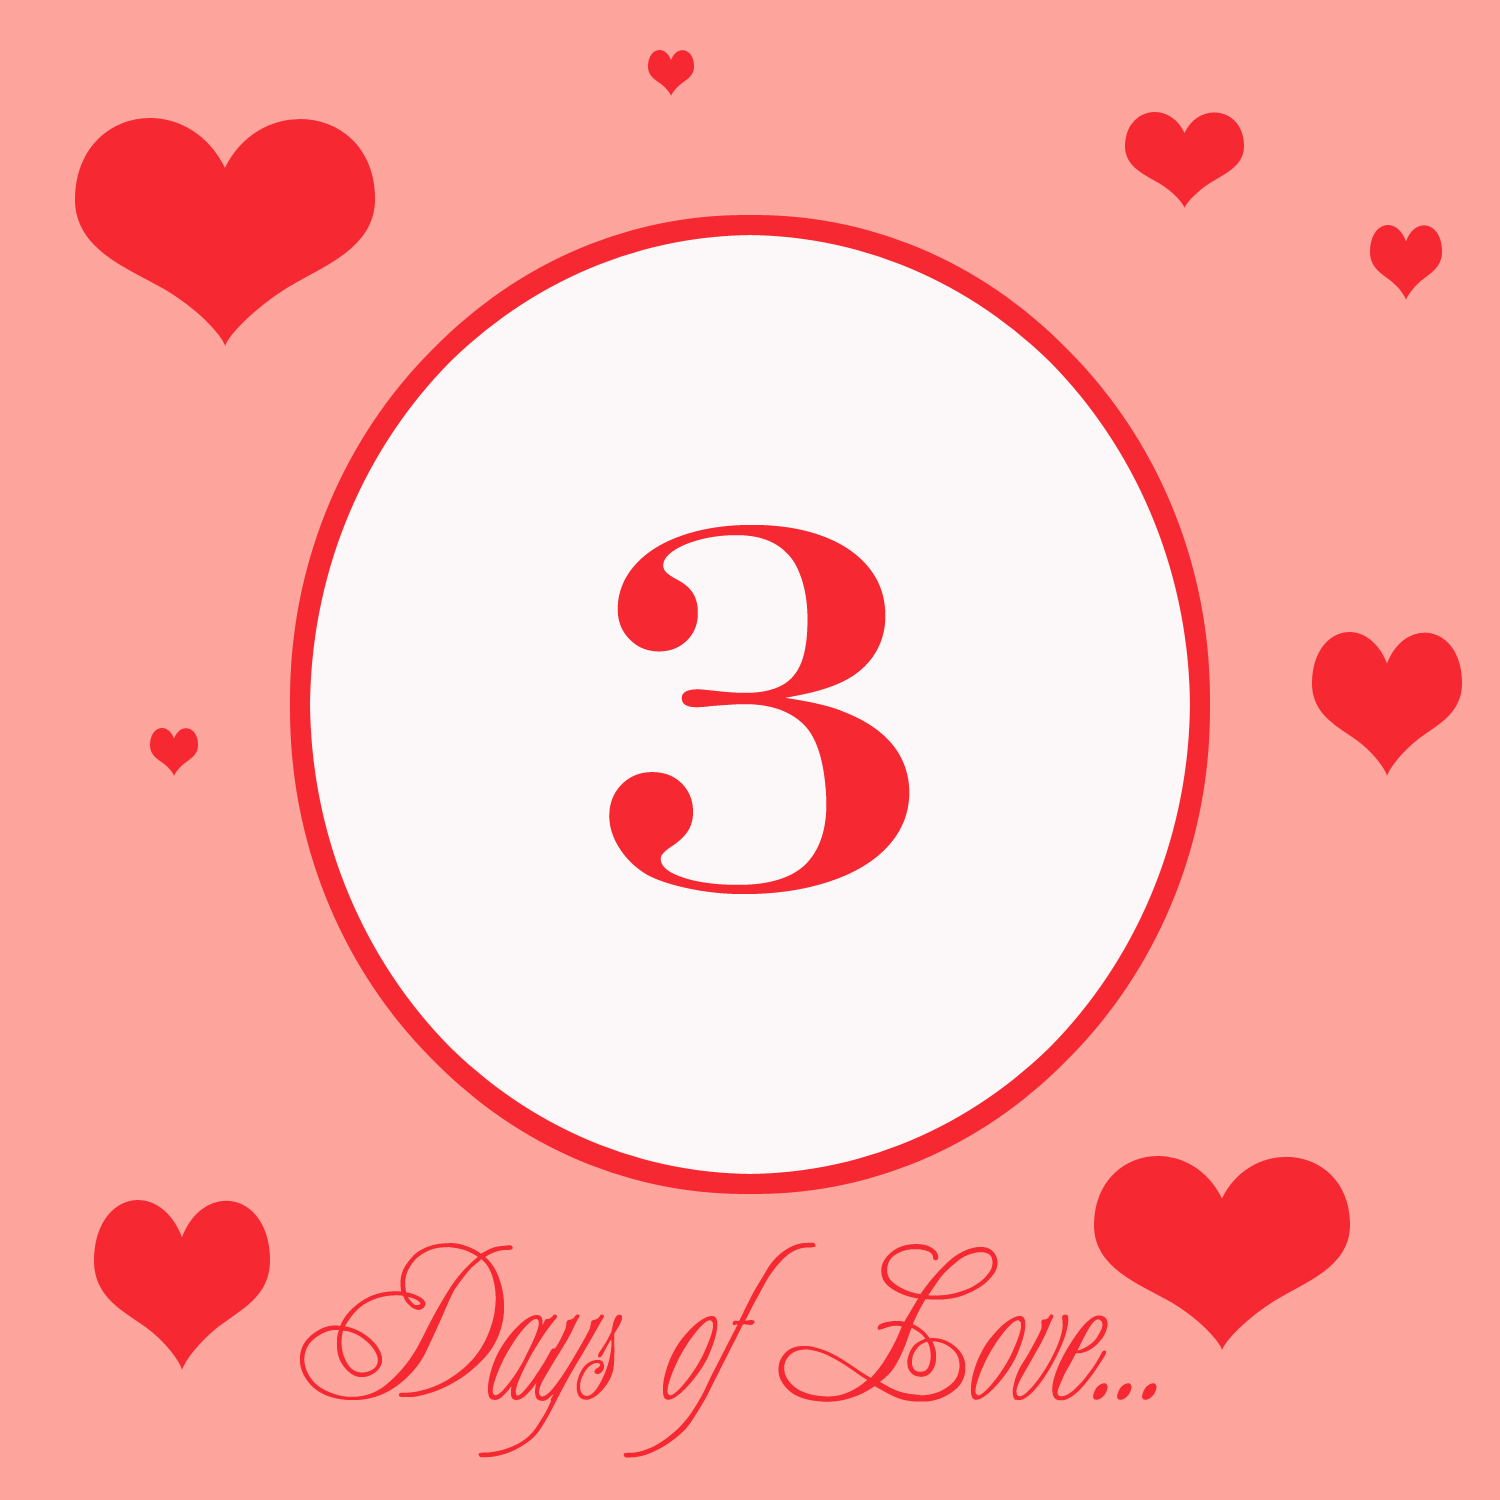 Juneberry Lane: Countdown to Valentine's Day! 3...